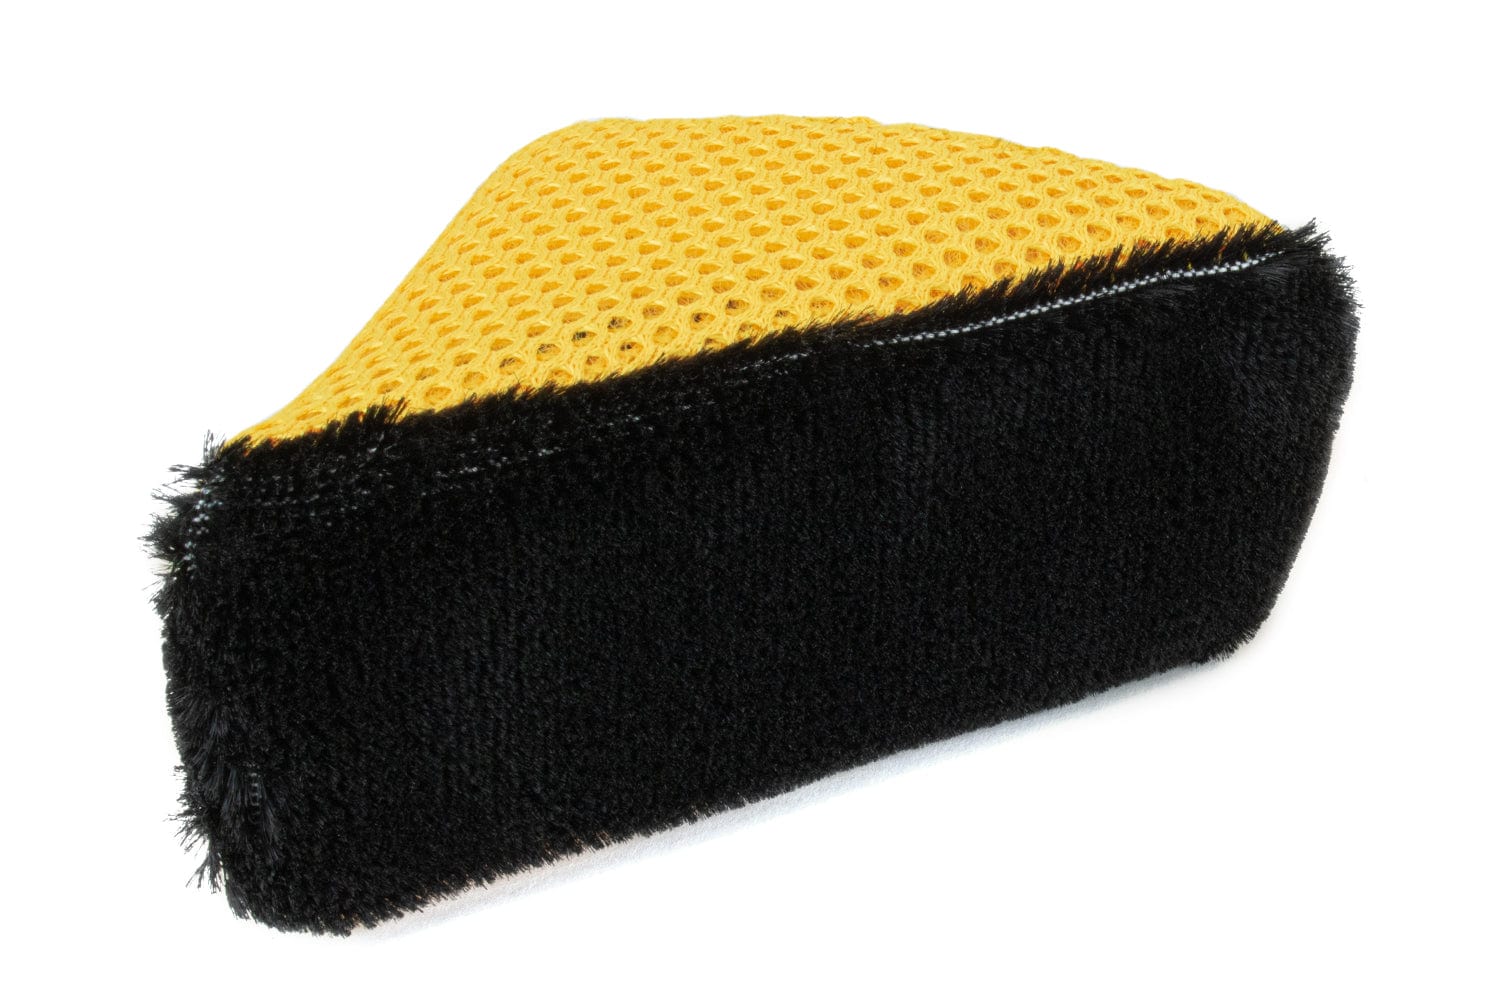 Autofiber Bulk Sponge Black/Gold FULL CASE [Scrub Ninja] Wedge Scrubber 5"x2.5"x2" - 144/case